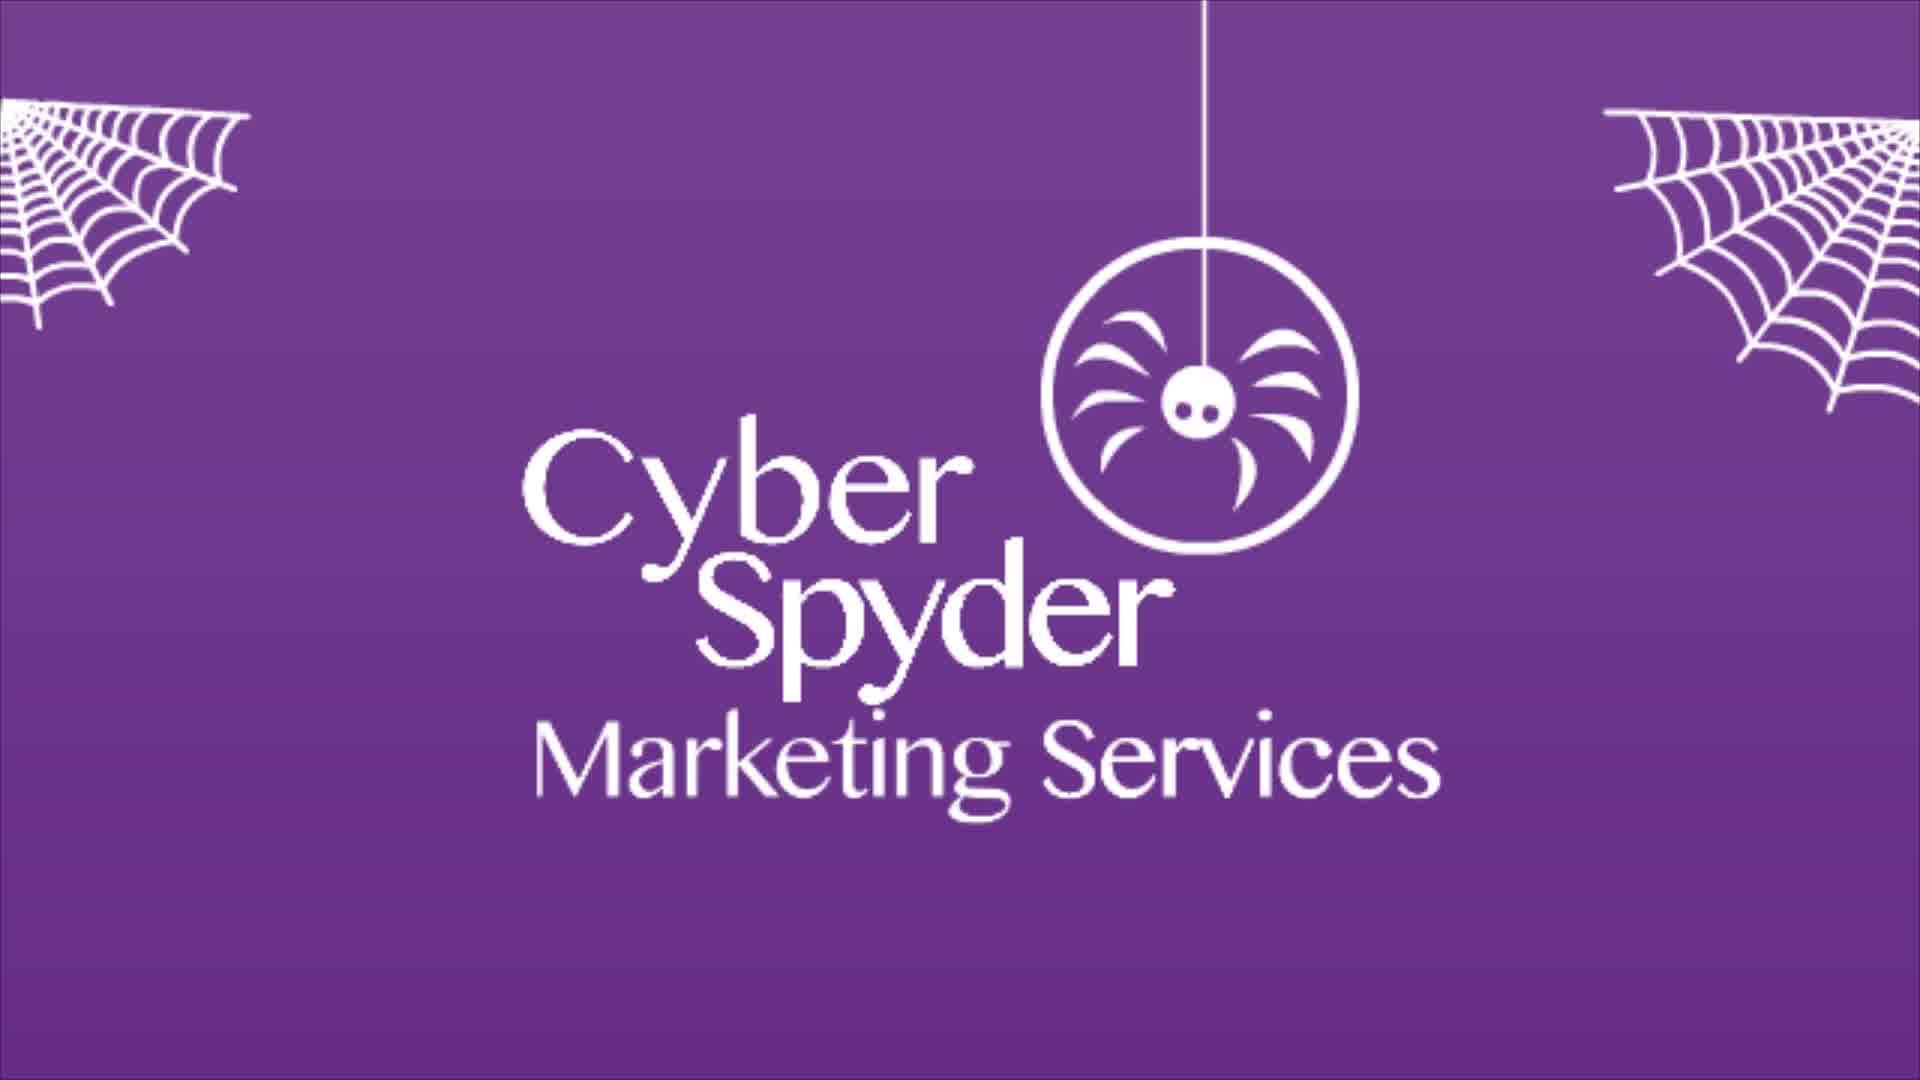 CyberSpyder Marketing Services